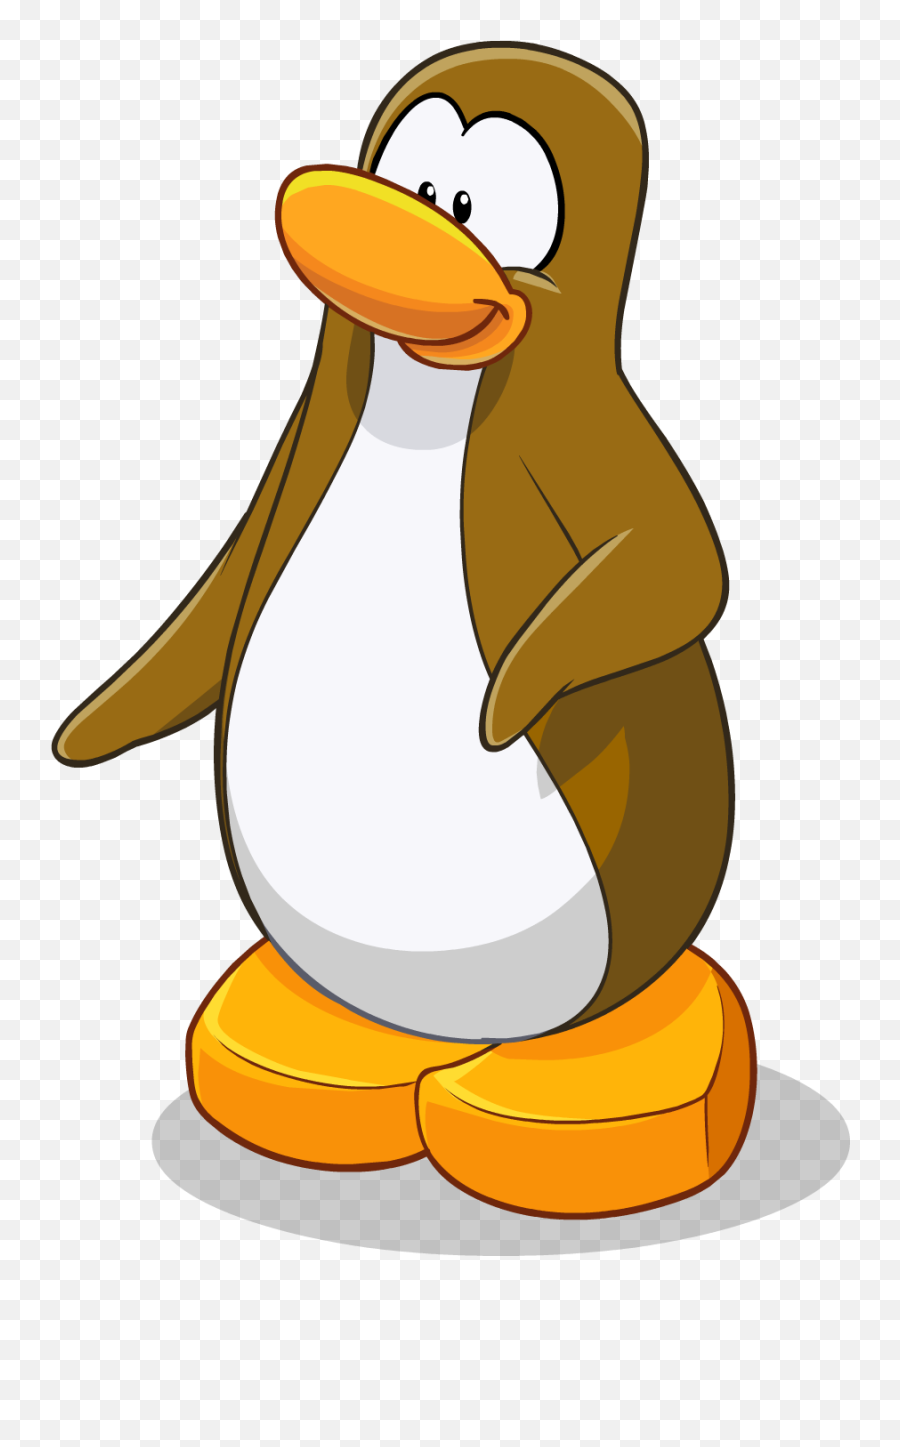 Club Penguin Png Image Download - New Club Penguin Penguins,Penguins Png